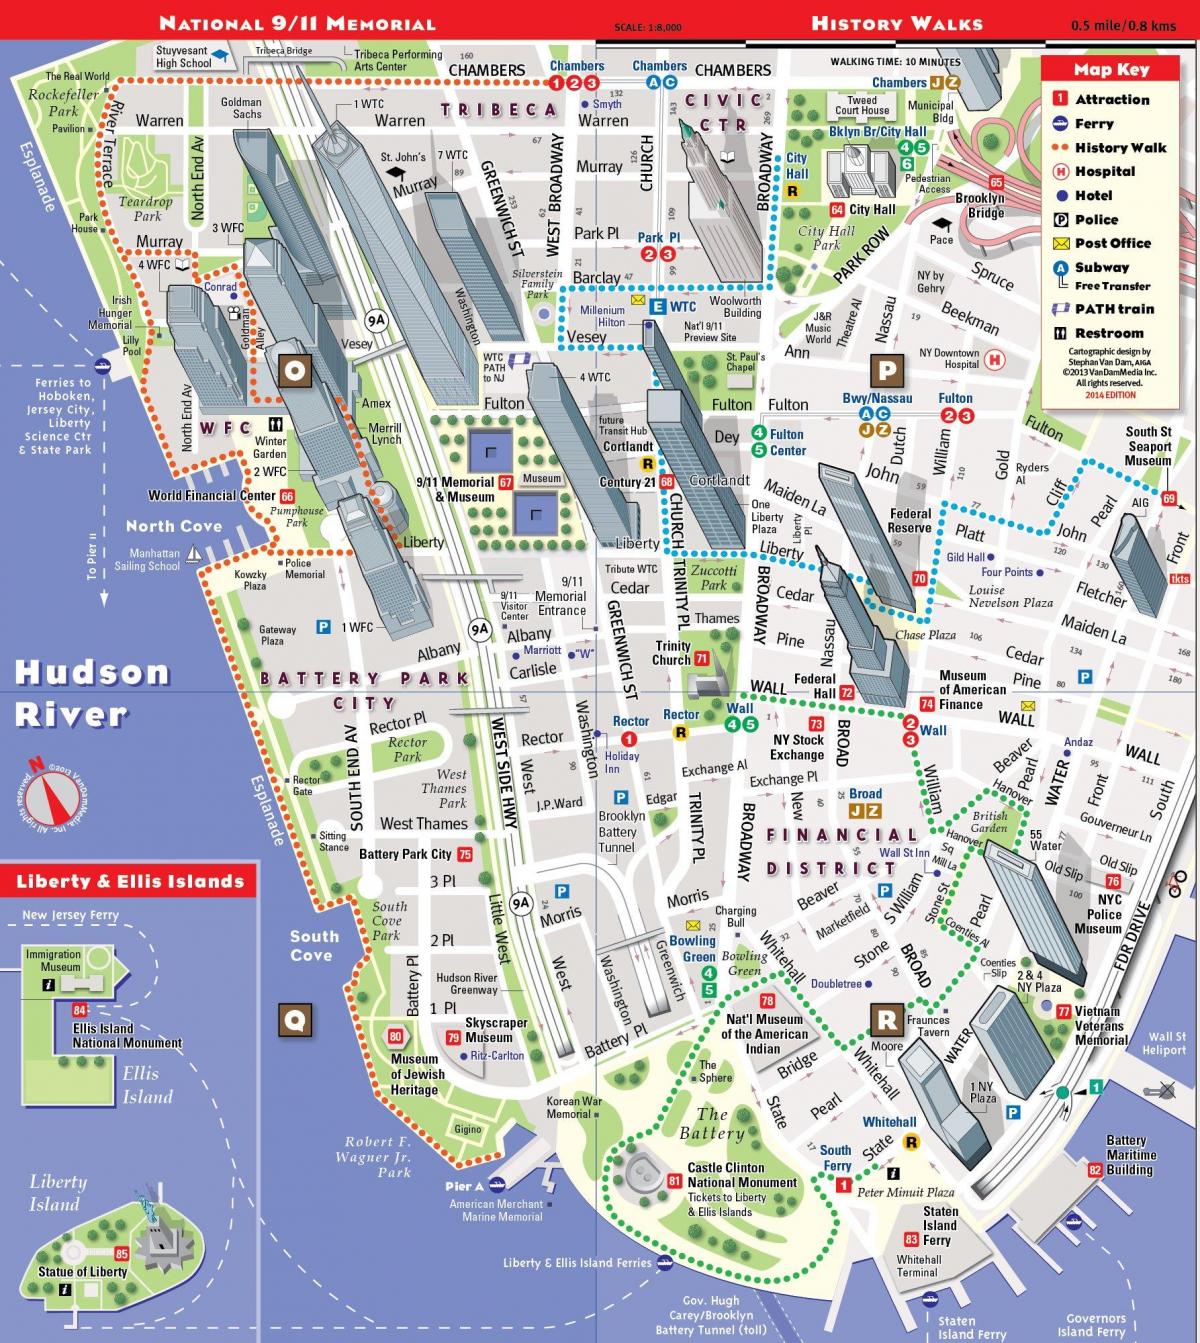 la part baixa de Manhattan mapa turístic